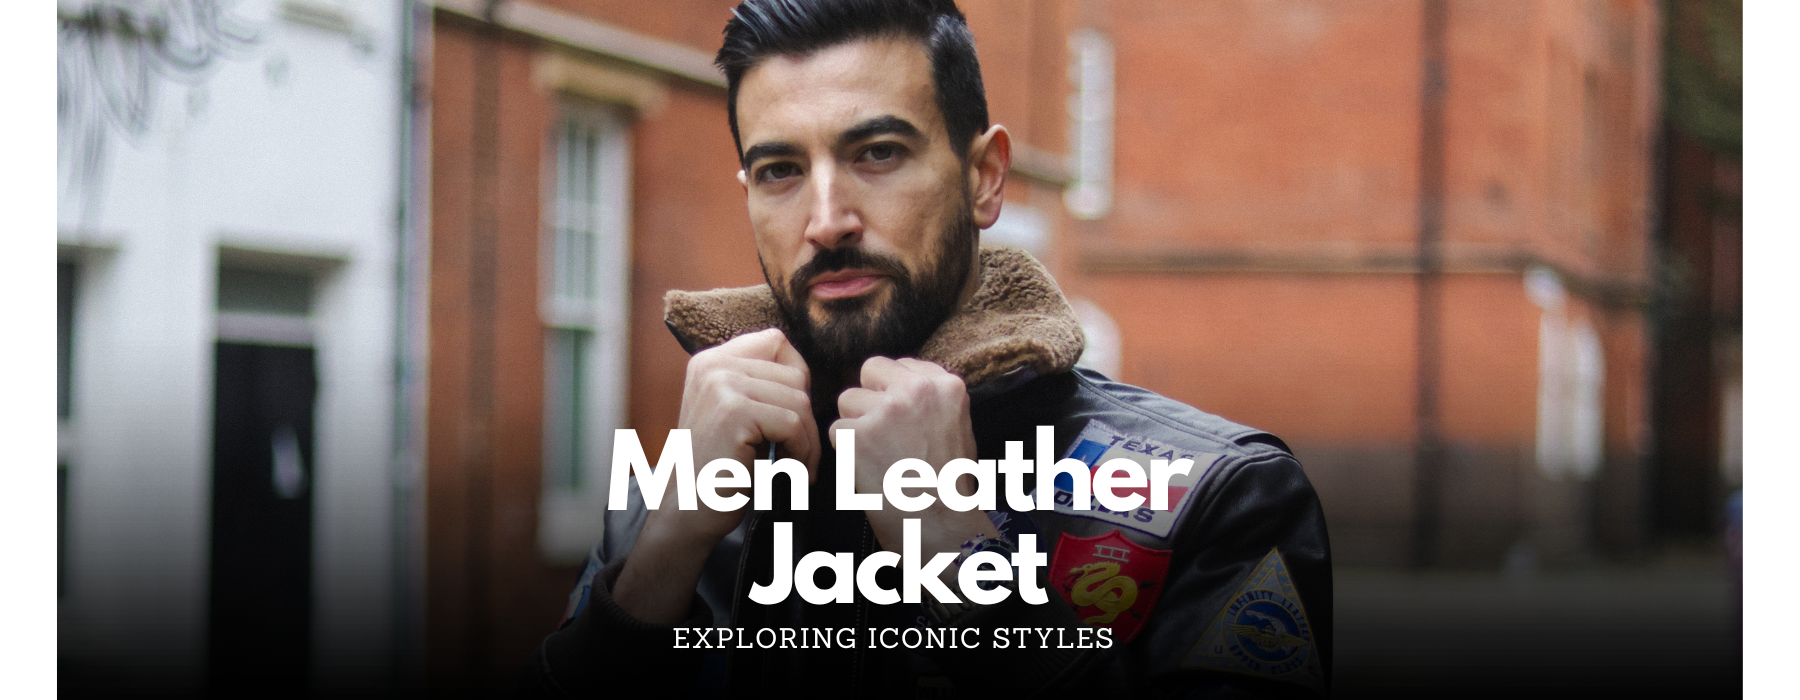 Exploring Iconic Men's Leather Jacket Styles